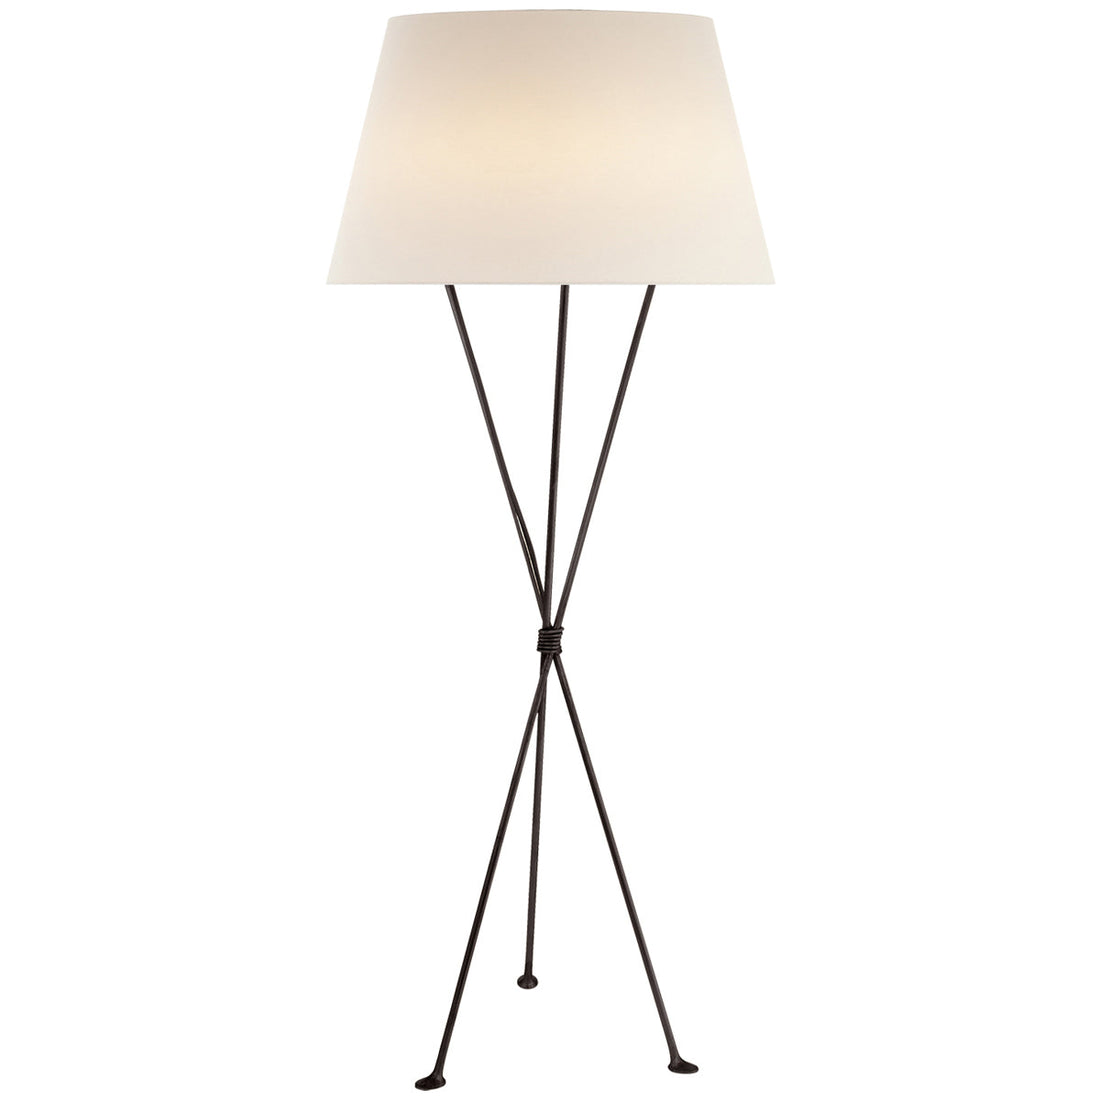 Visual Comfort Lebon Floor Lamp